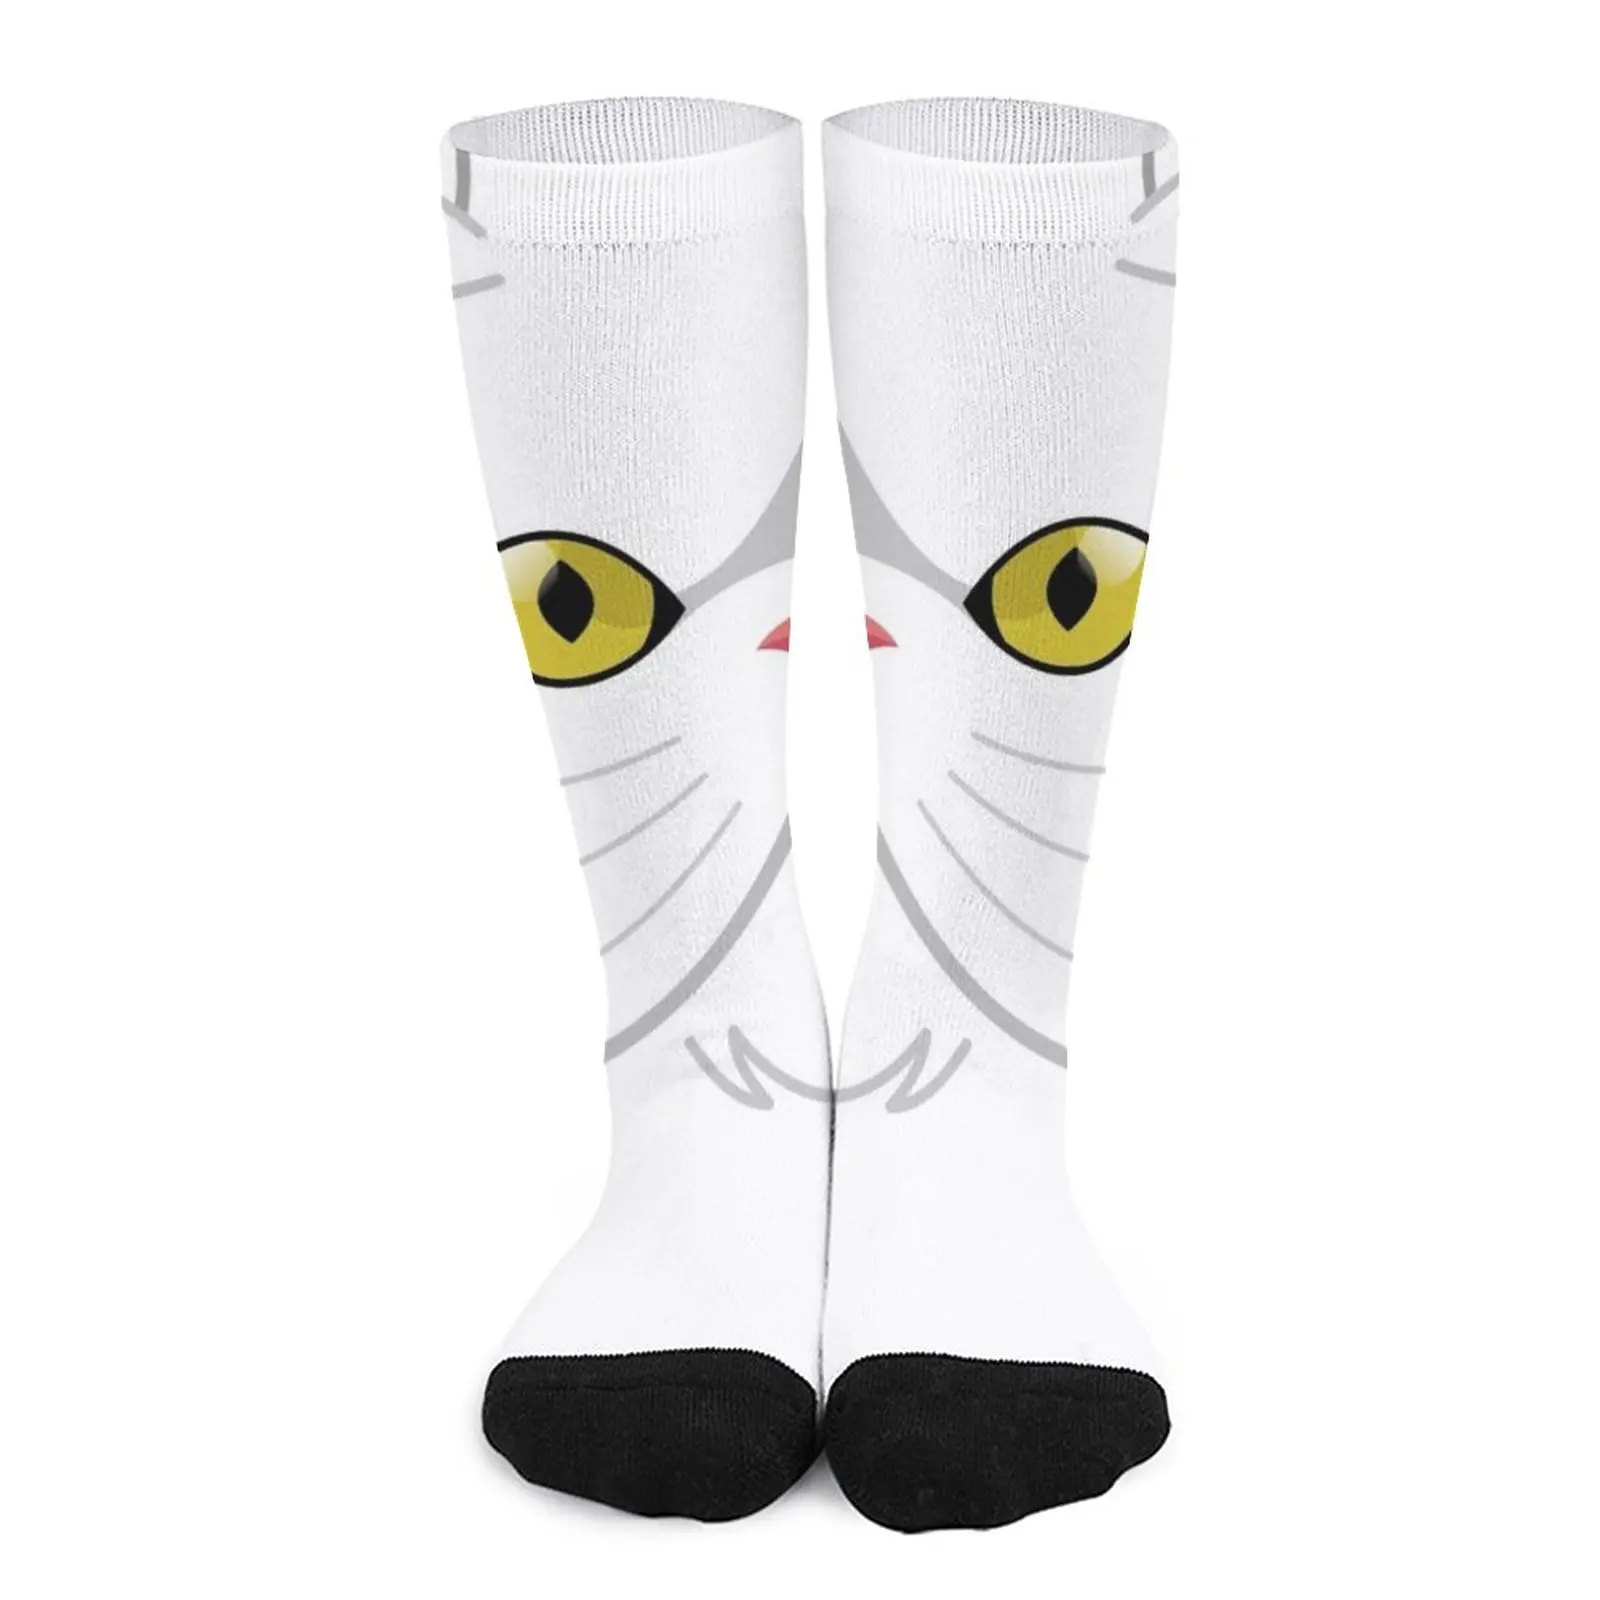 Persian cat face Socks funny gifts golf Golf socks